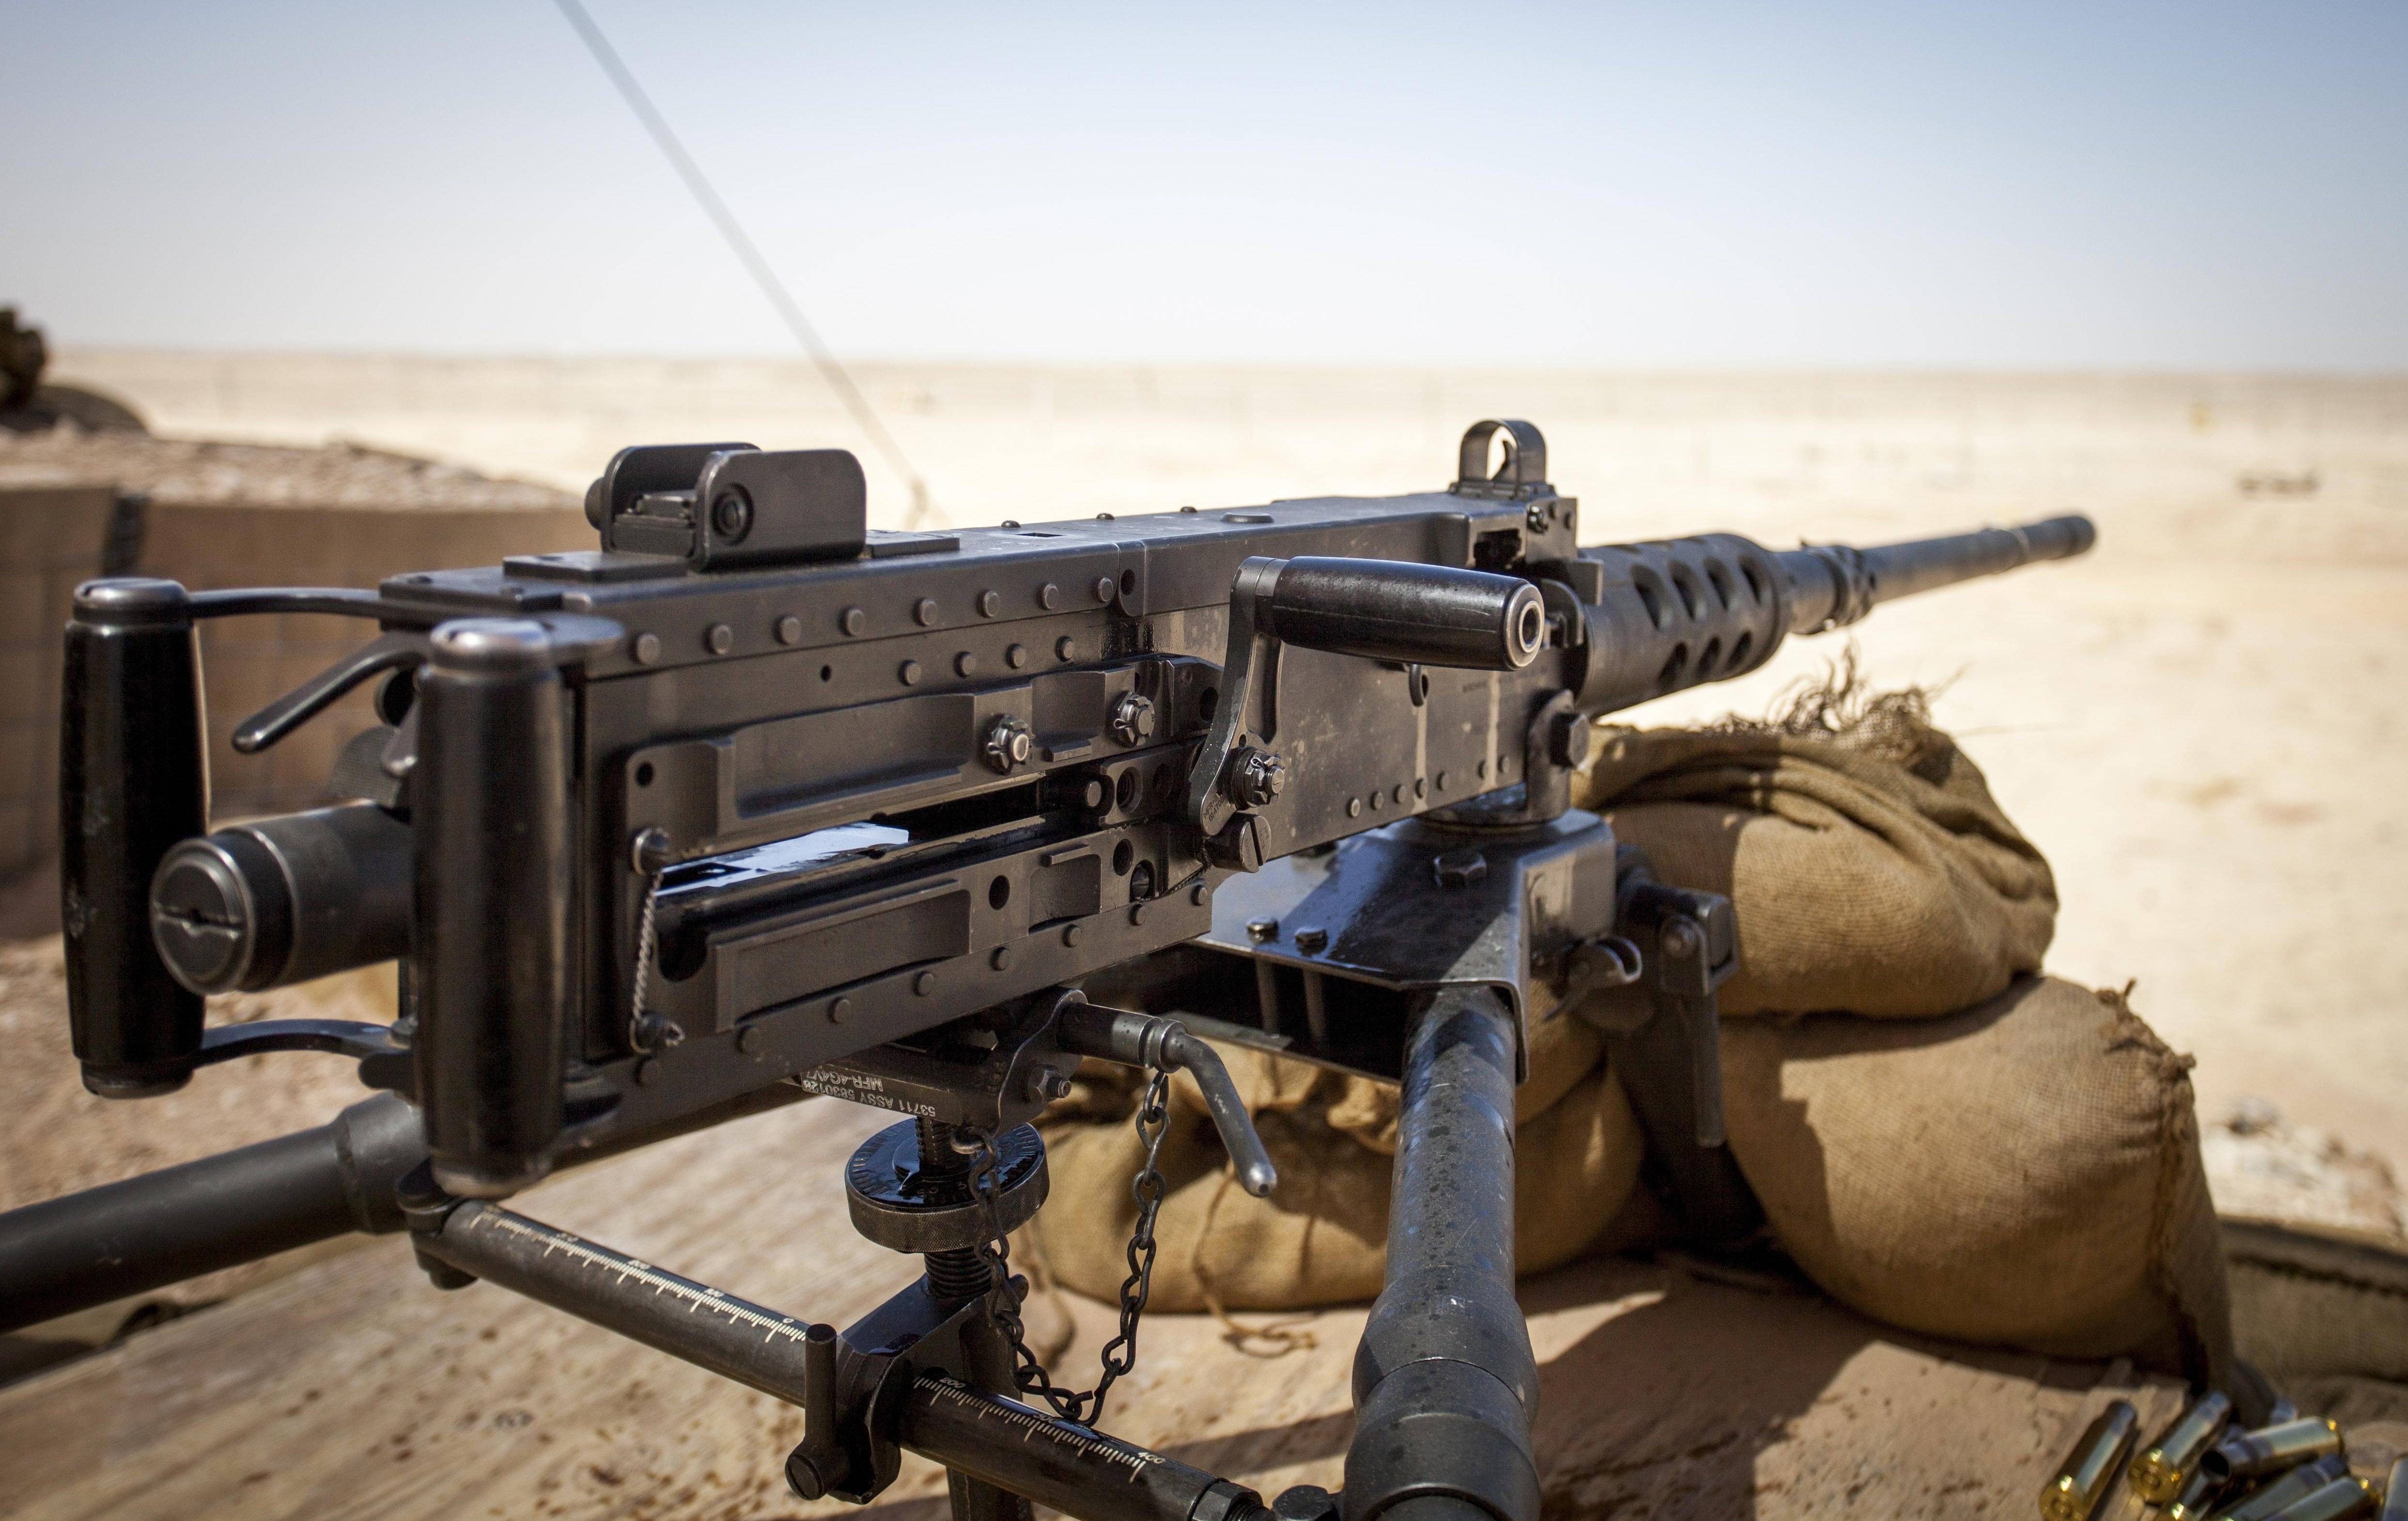 M60 (пулемёт) — википедия